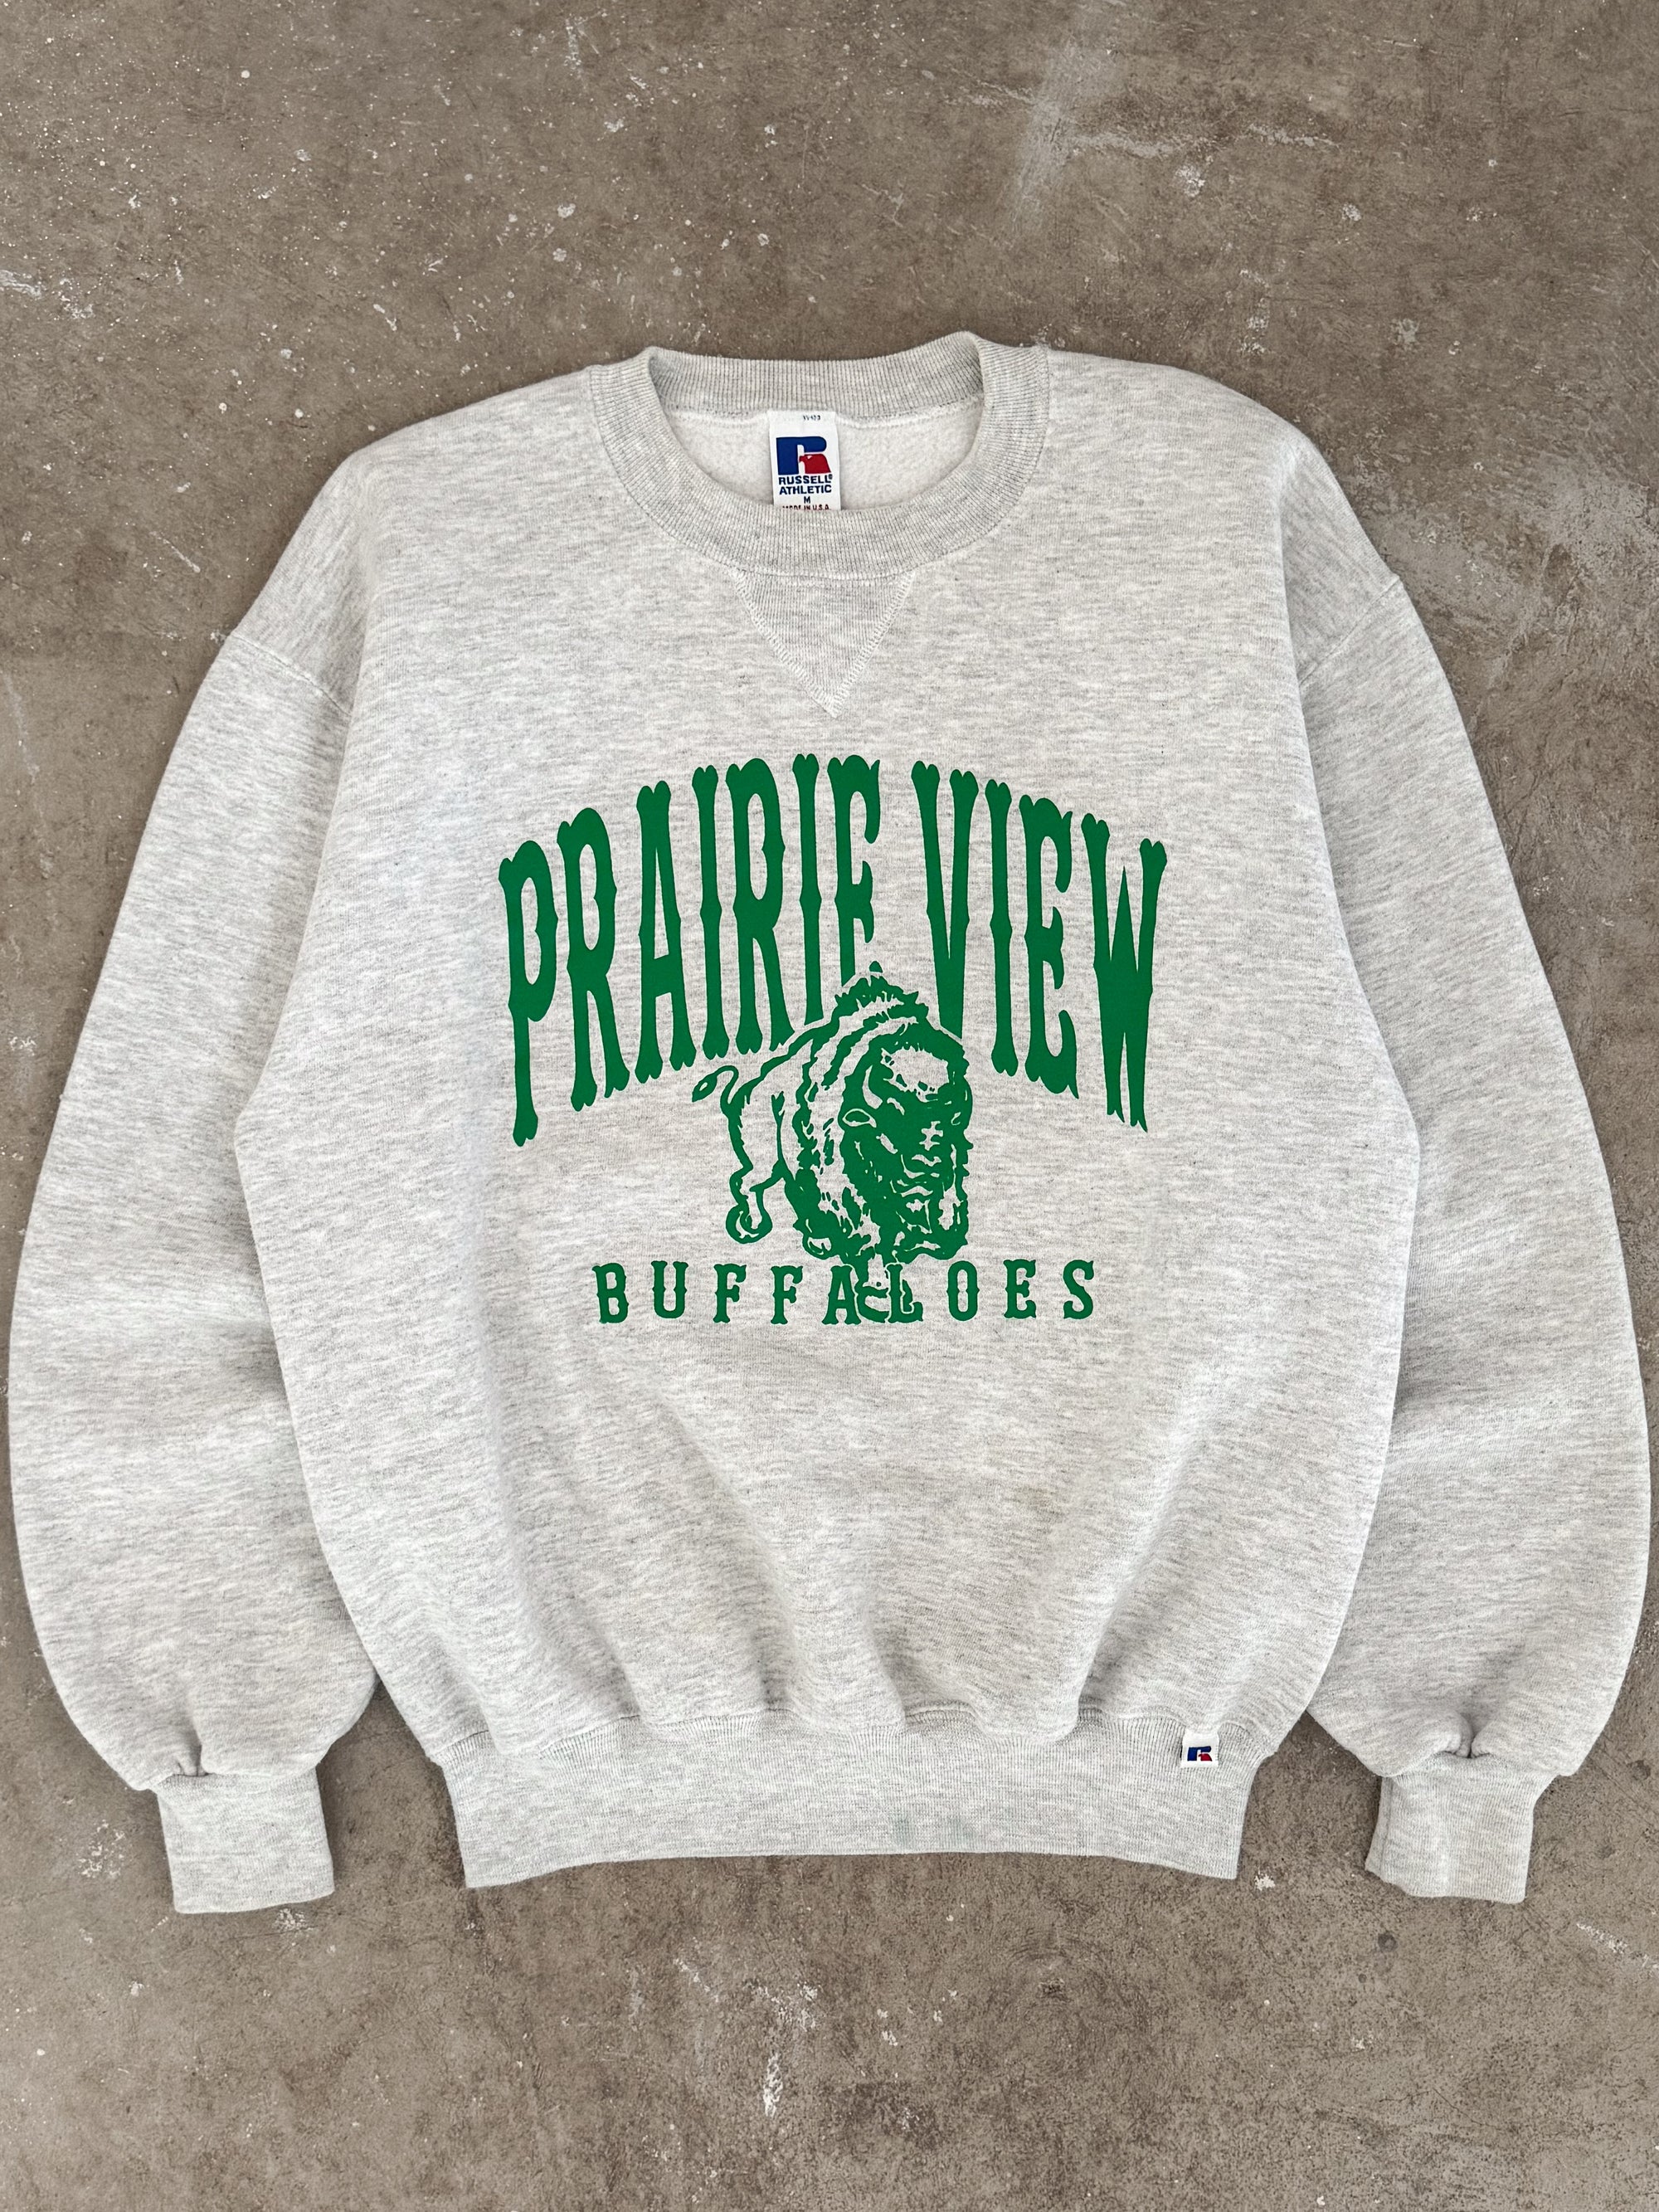 1990s Russell "Prairie View" Sweatshirt (S/M)